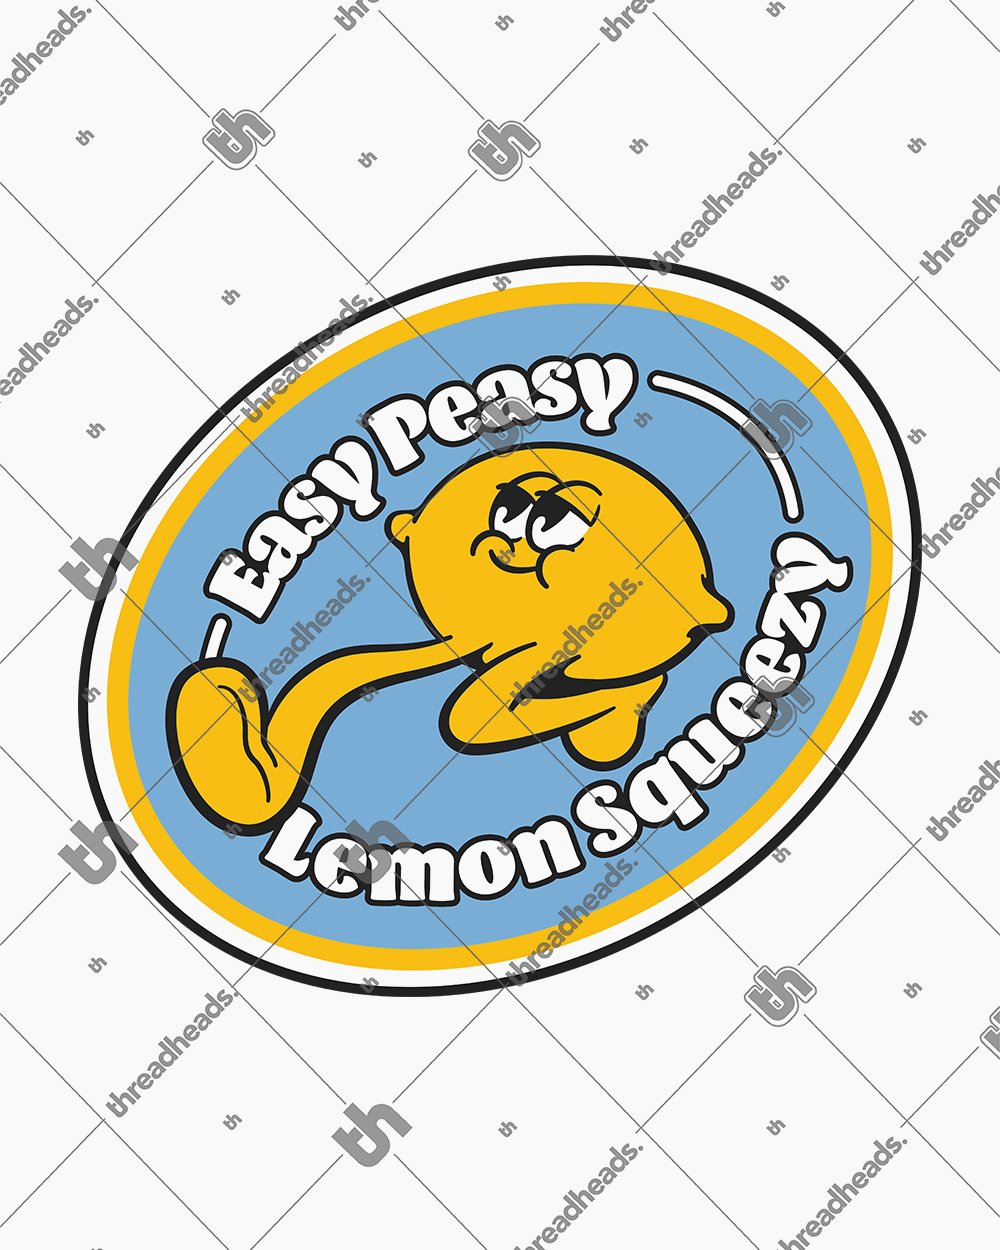 Easy Peasy Lemon Squeezy T-Shirt Europe Online #colour_white